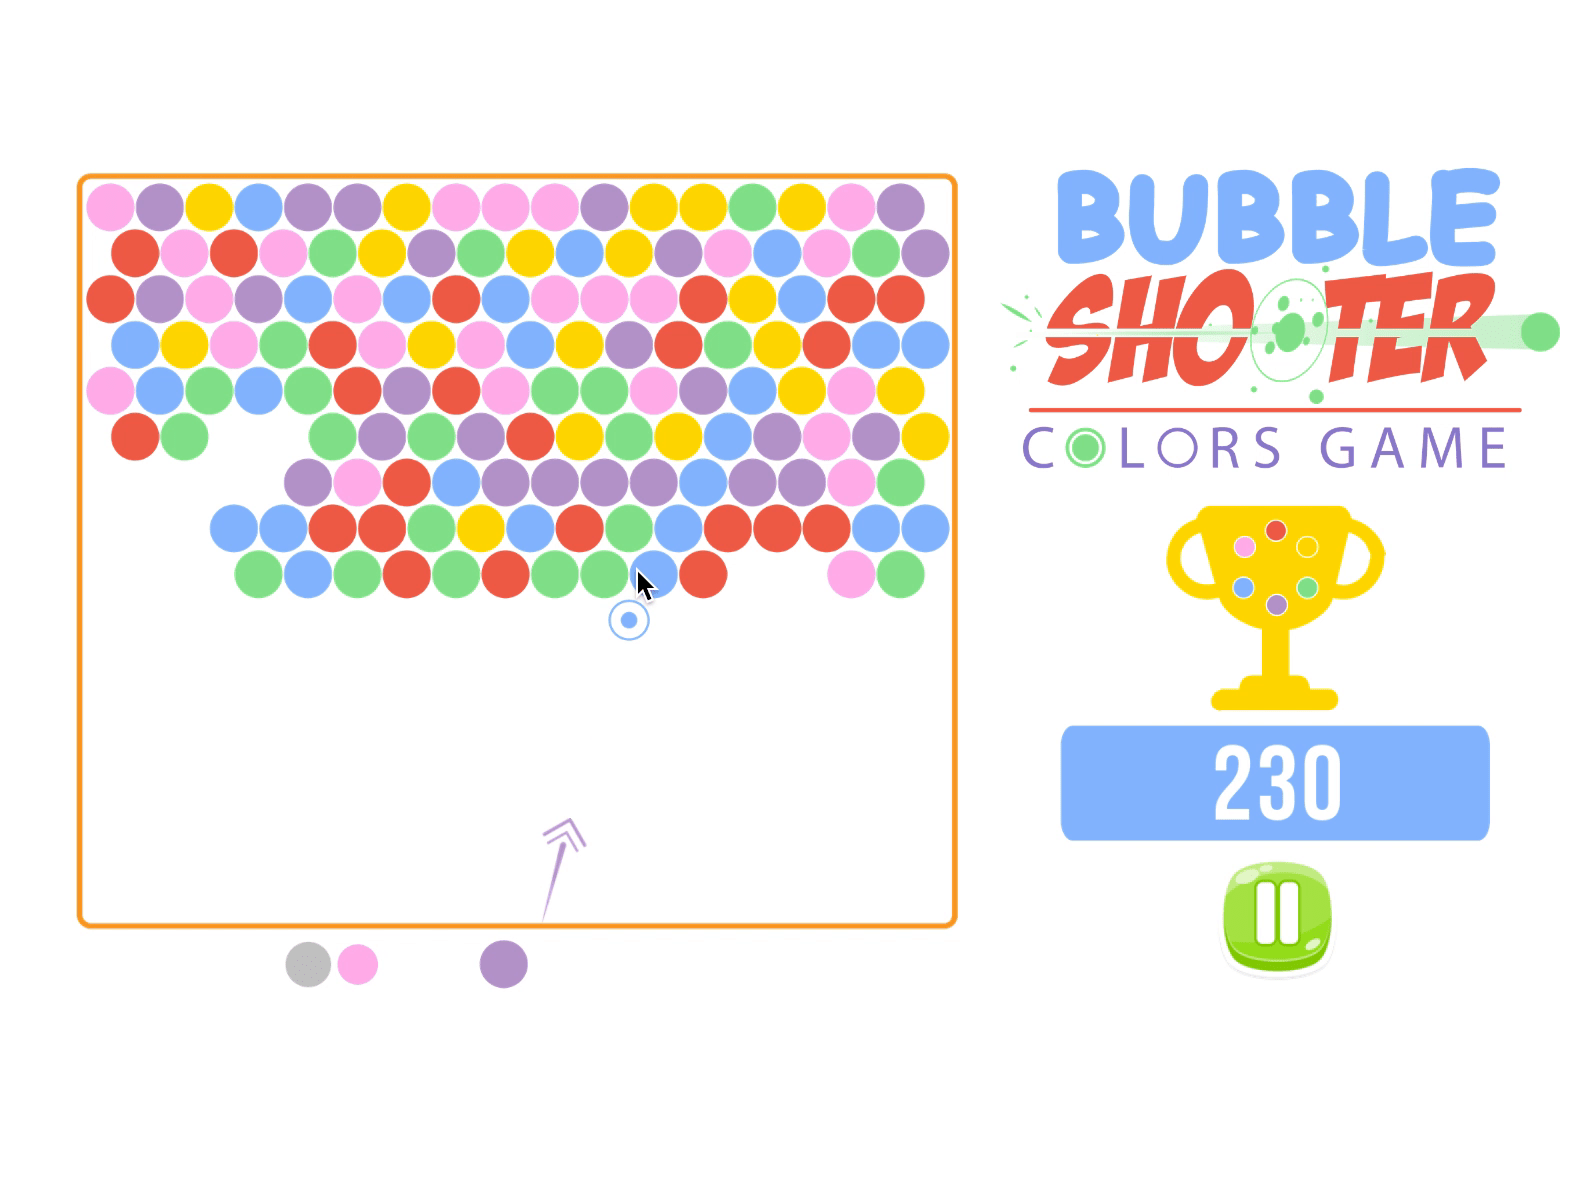 Bubble Shooter Colors Game Screenshot 11